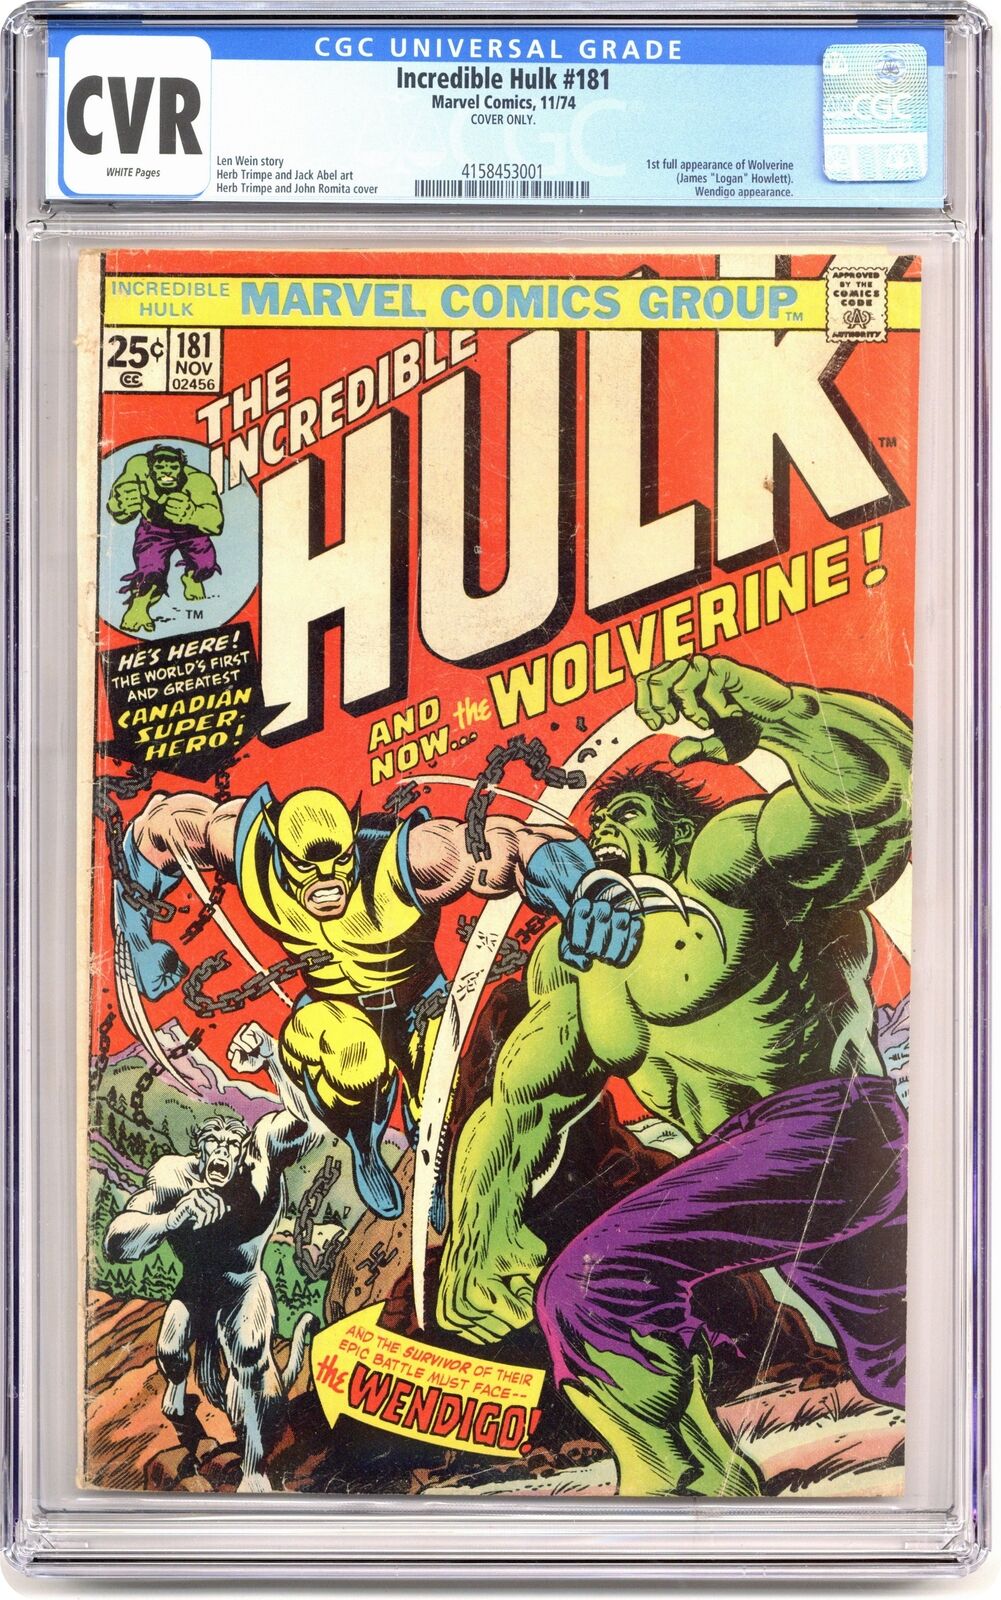 Incredible Hulk (1962 Marvel 1st Series) 181 CGC CVR Cover Only 4158453001